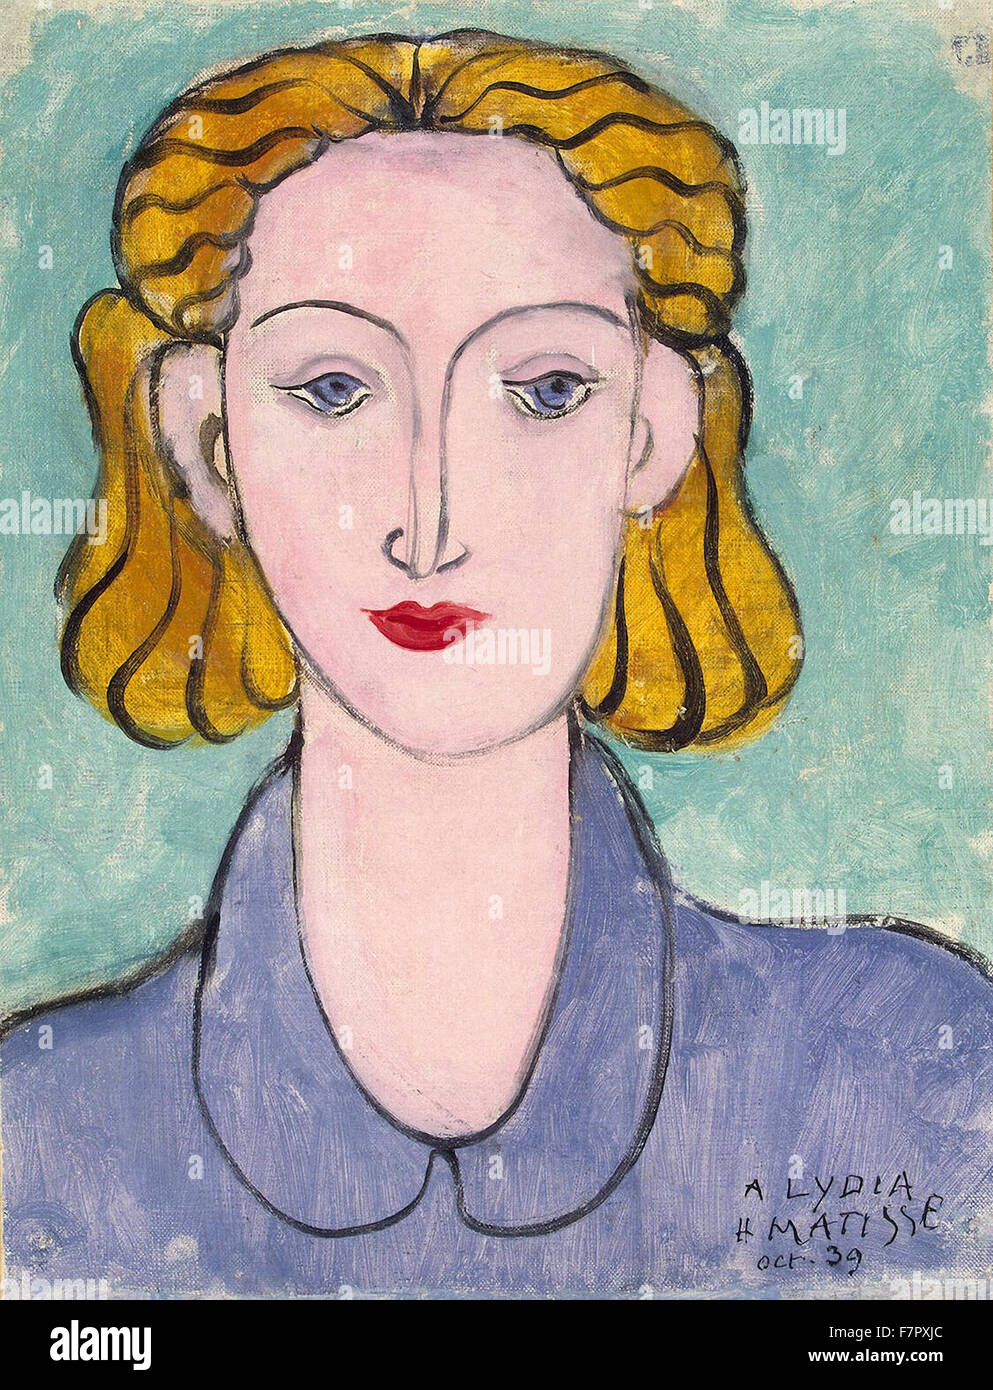 Matisse Portrait Drawings